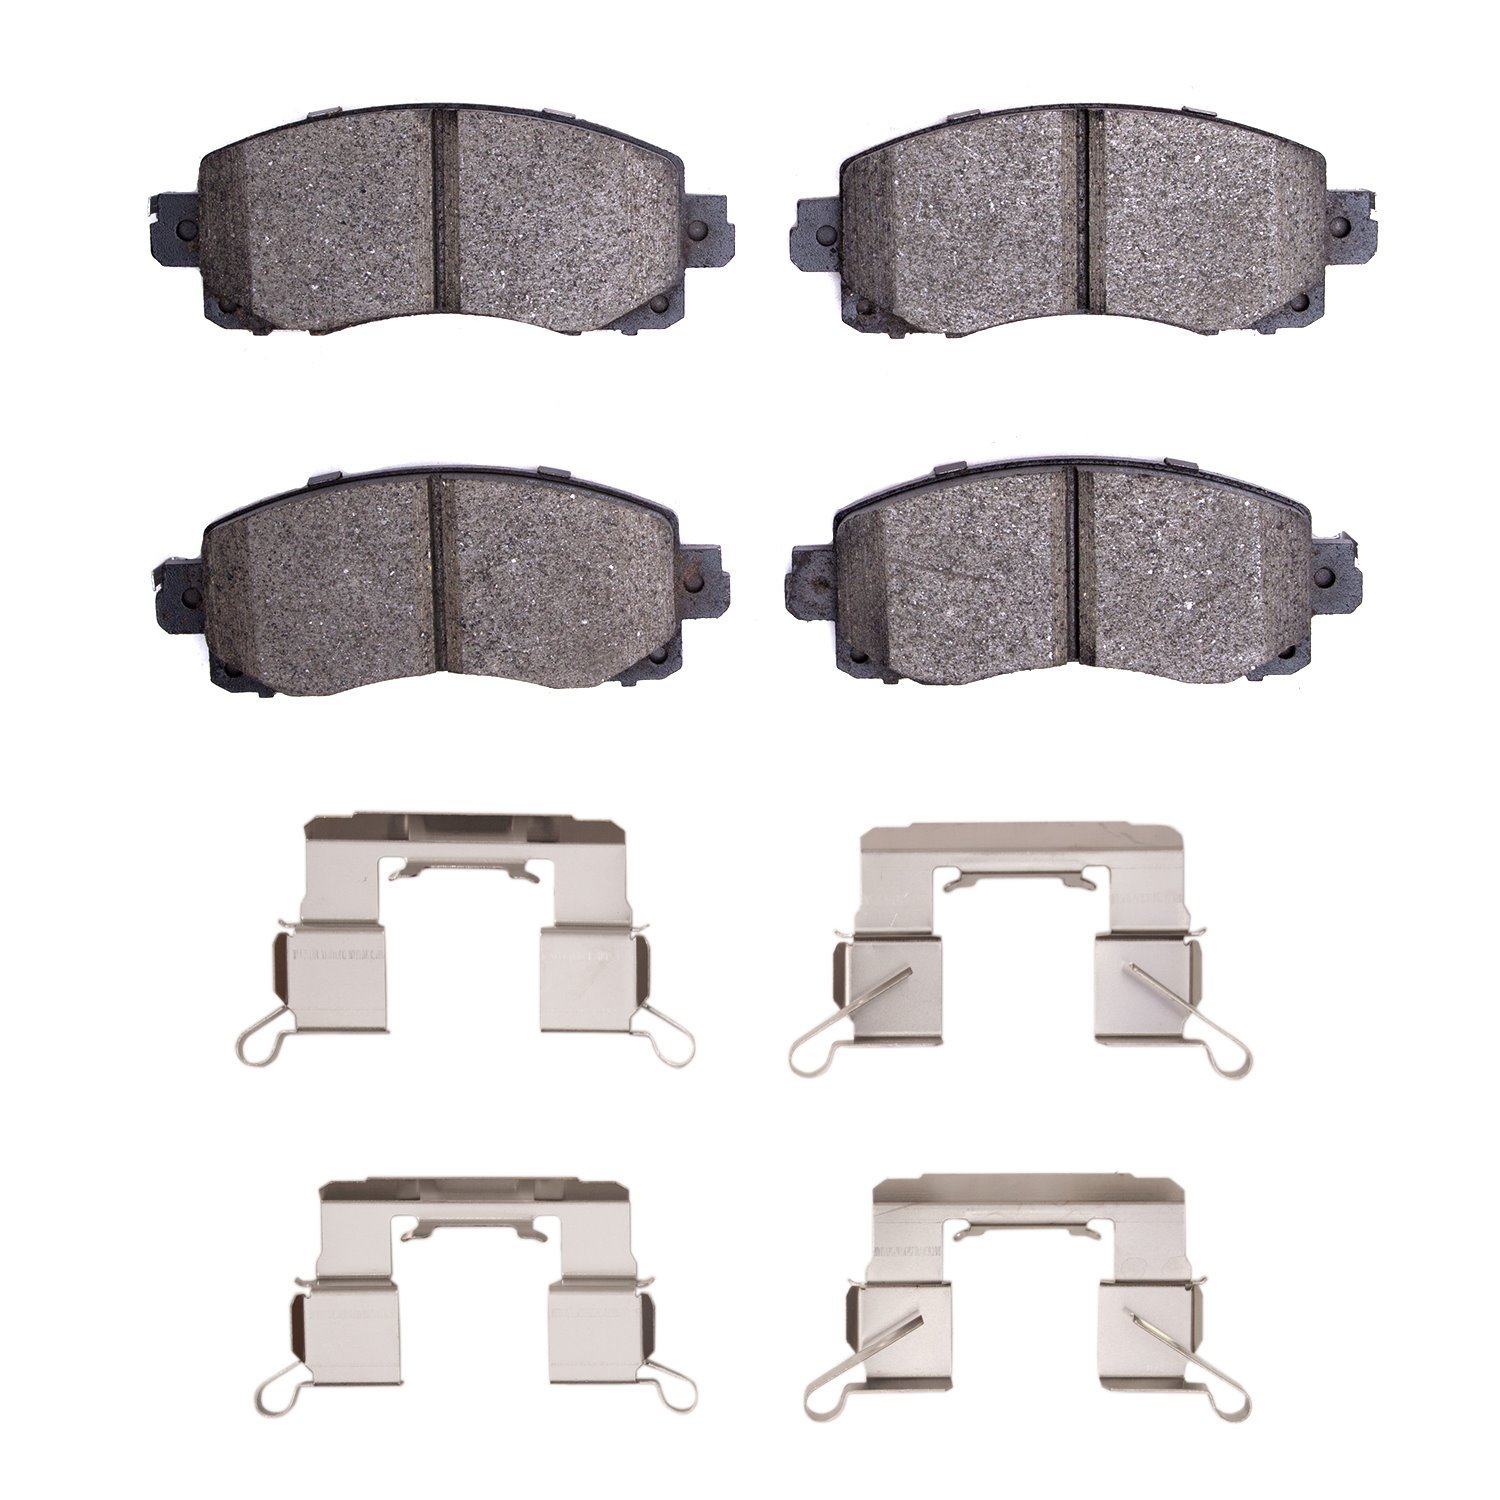 Ceramic Brake Pads & Hardware Kit, Fits Select Subaru, Position: Front